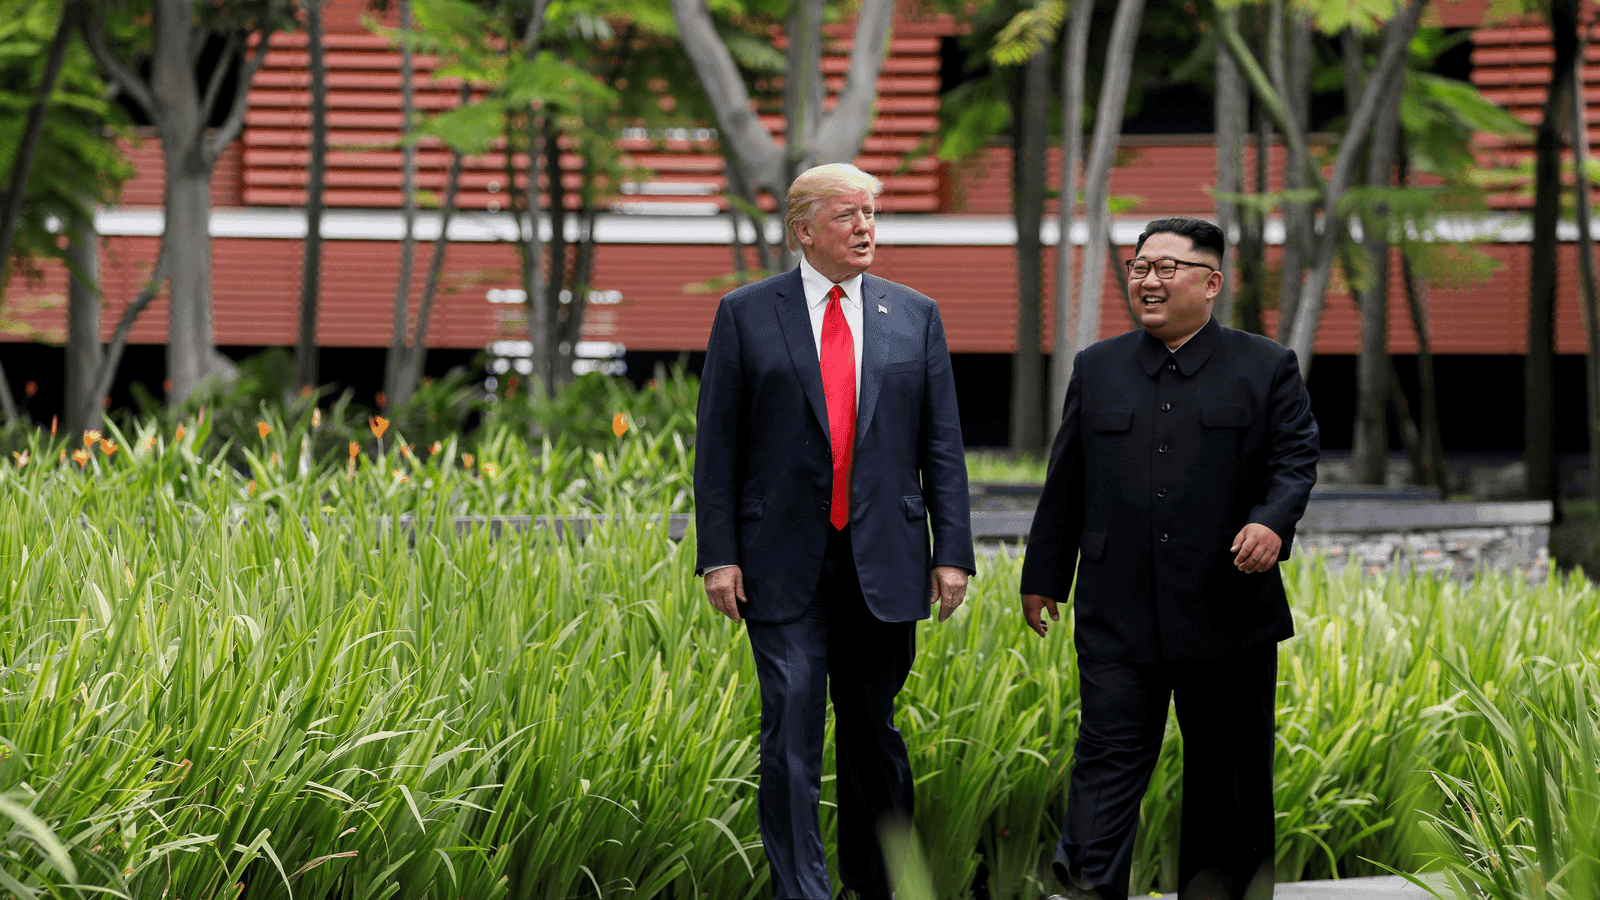 Donald Trump and Kim Jong-un walk together